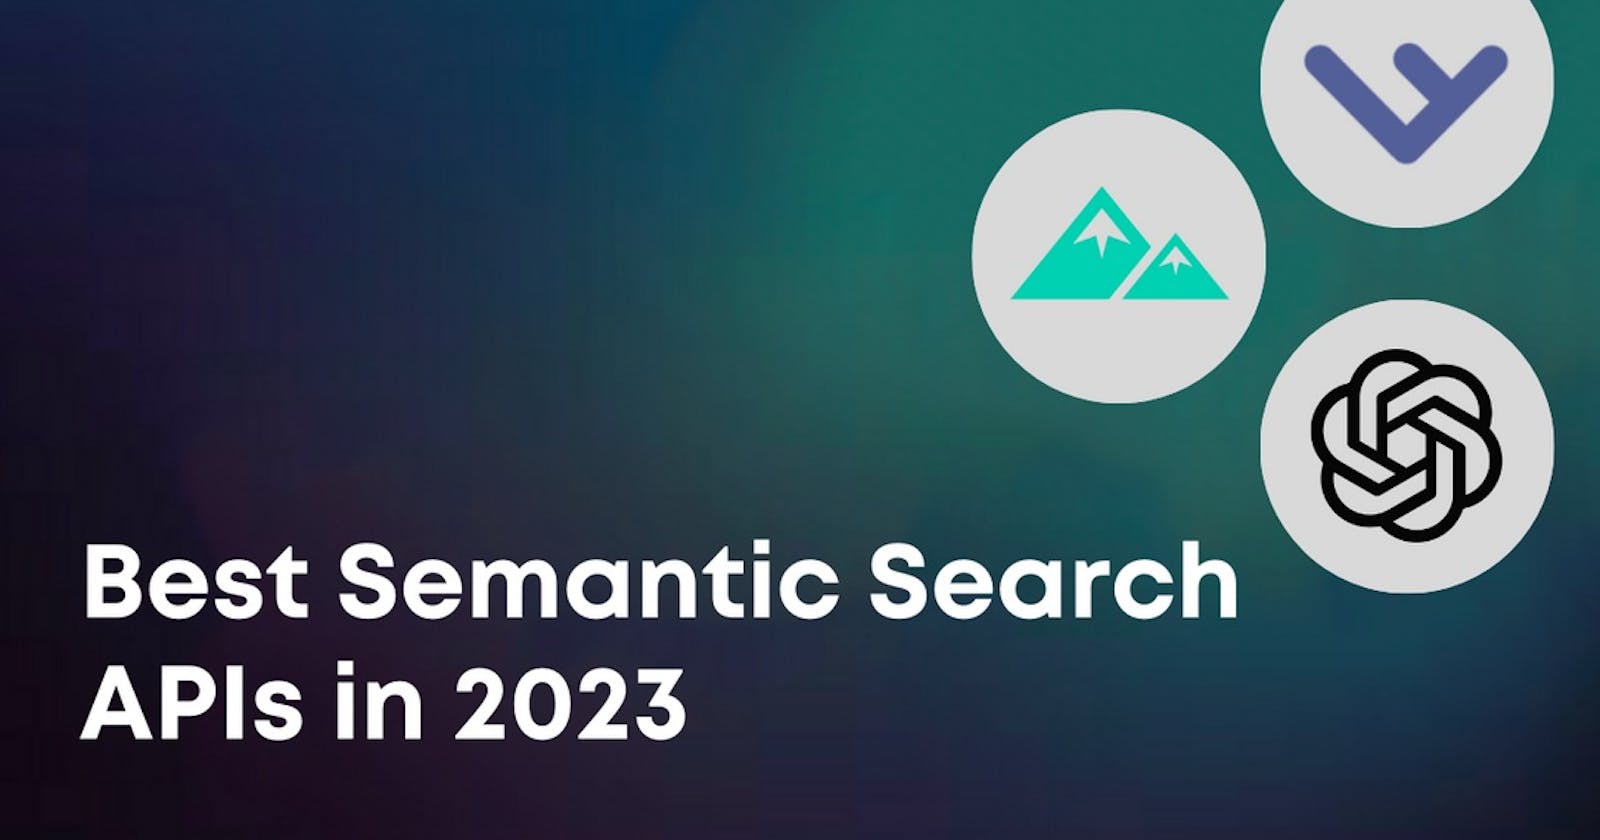 Best Semantic Search APIs in 2023